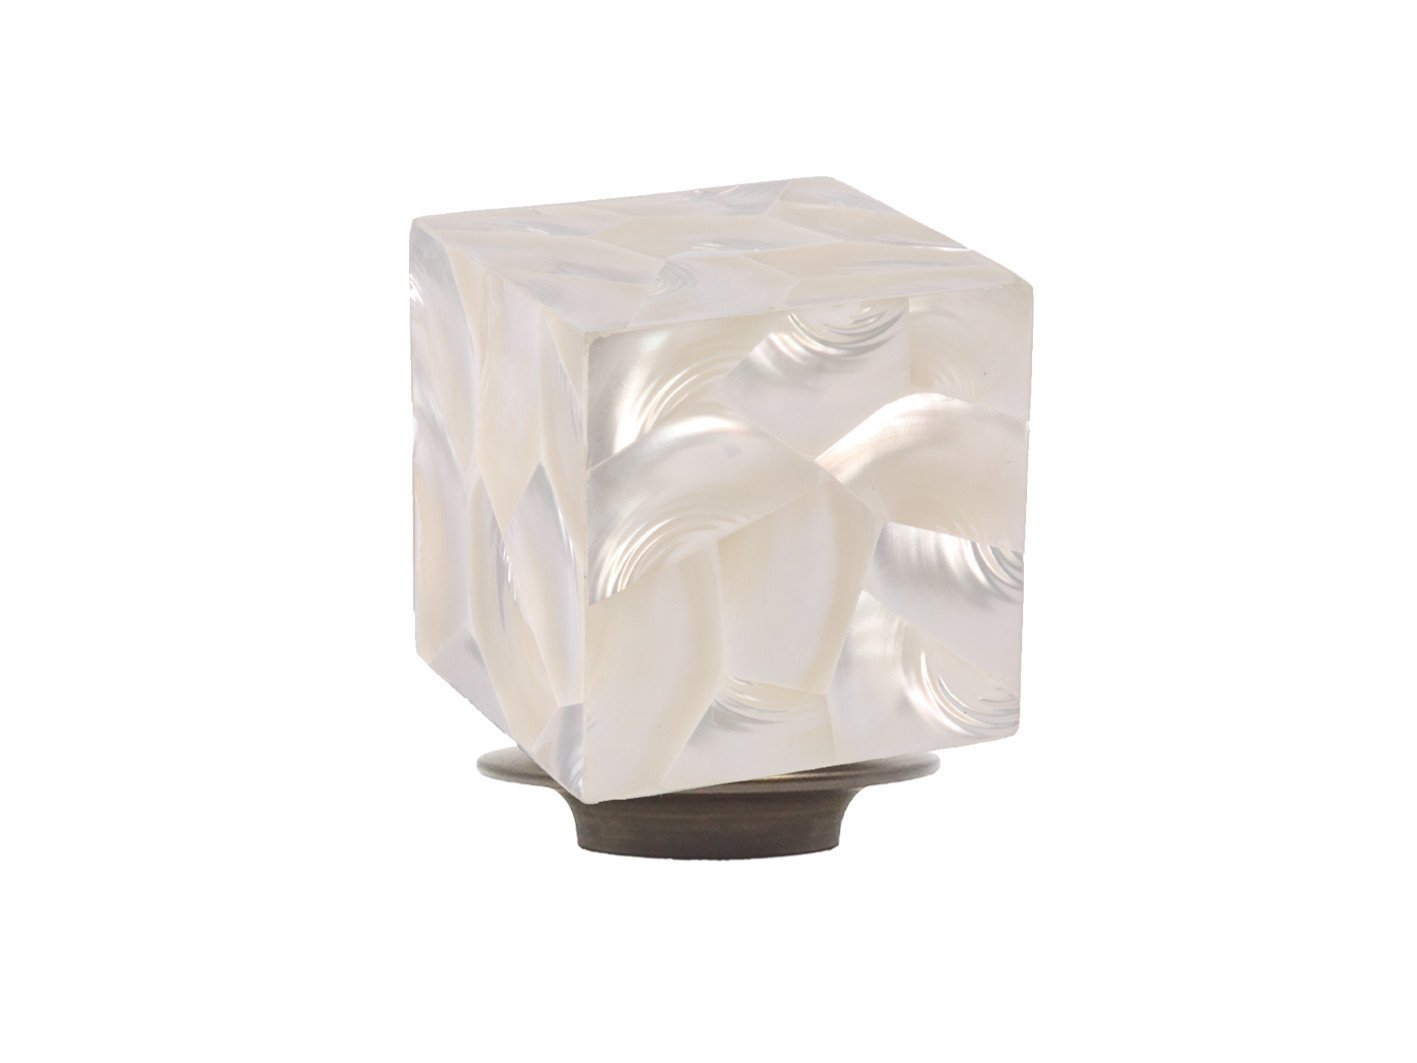 Designer curtain pole finial | Troca Satin white riva cube shell with bronze plate